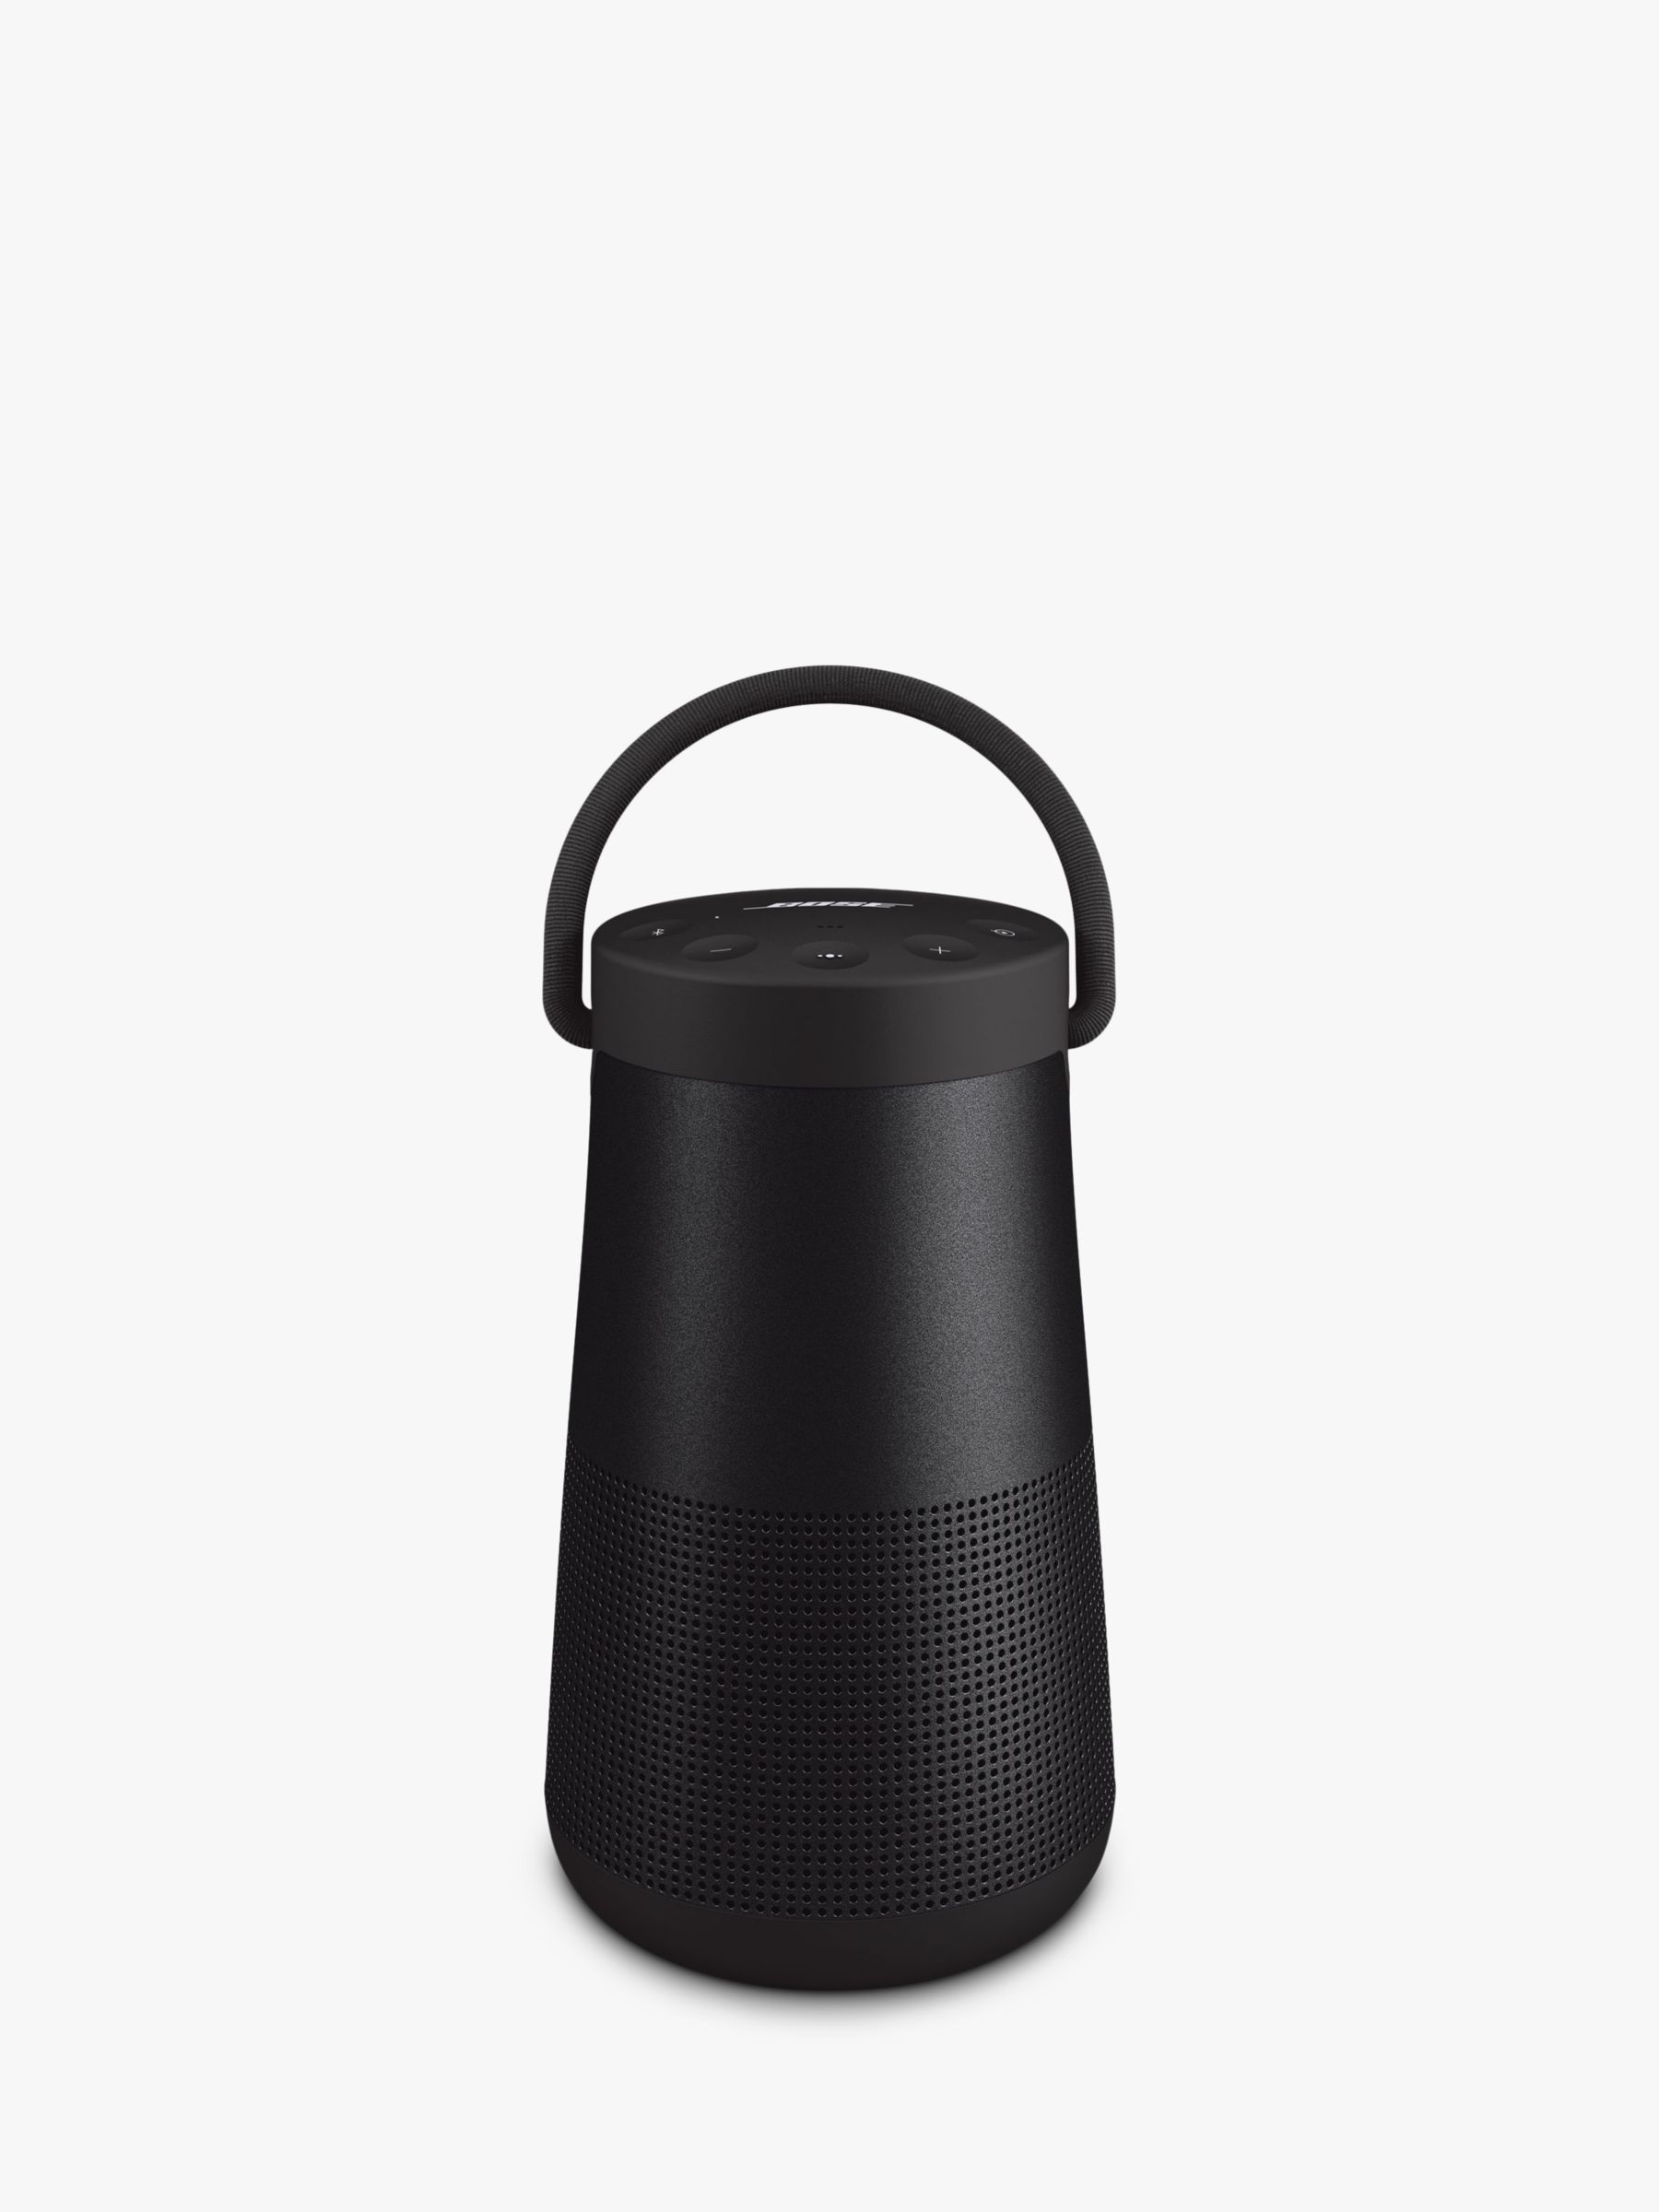 Bose SoundLink Revolve+ II Water-resistant Portable Bluetooth